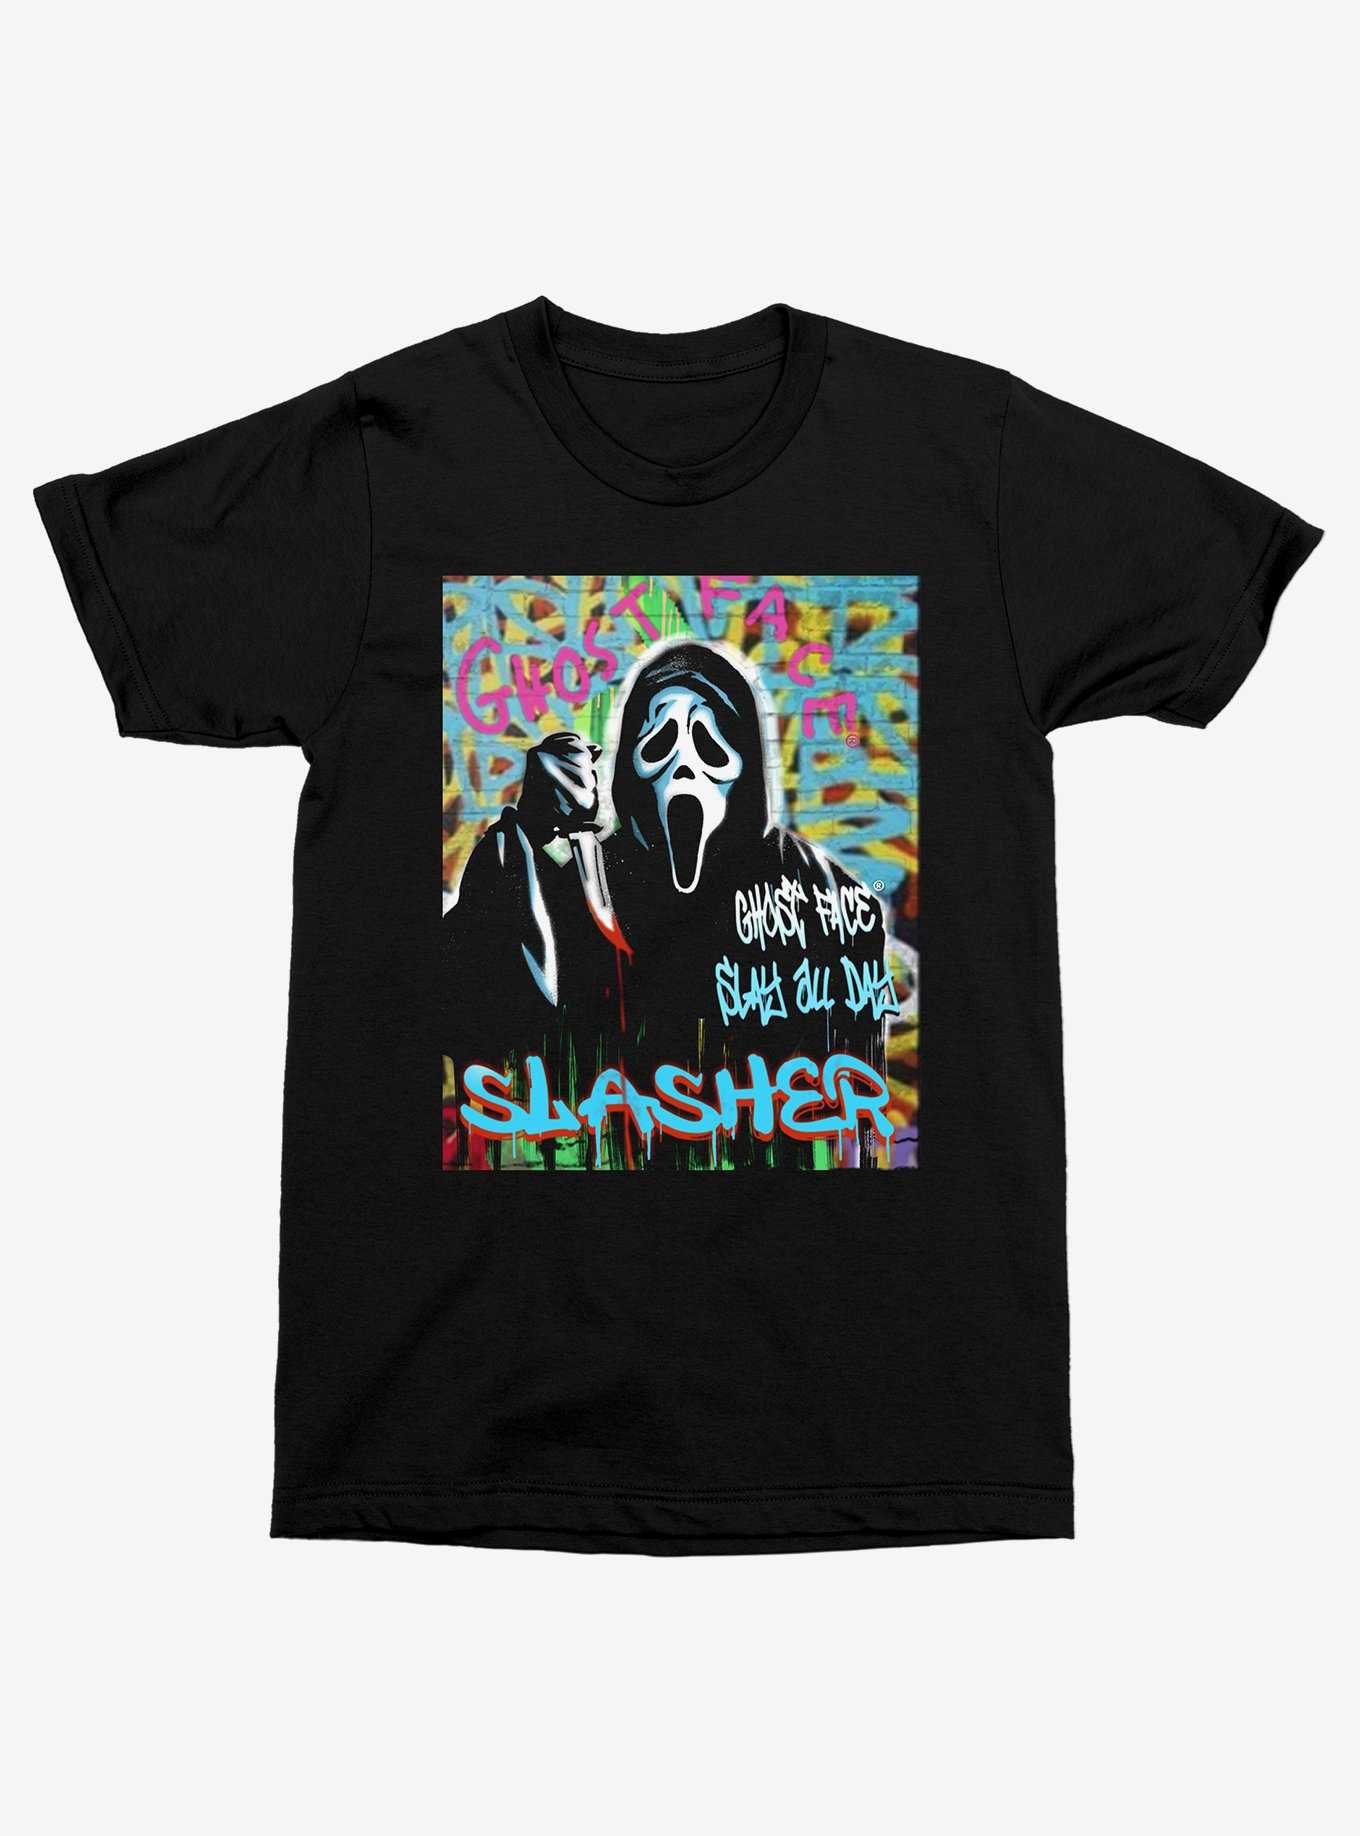 Scream Ghost Face Street Art T-Shirt, , hi-res